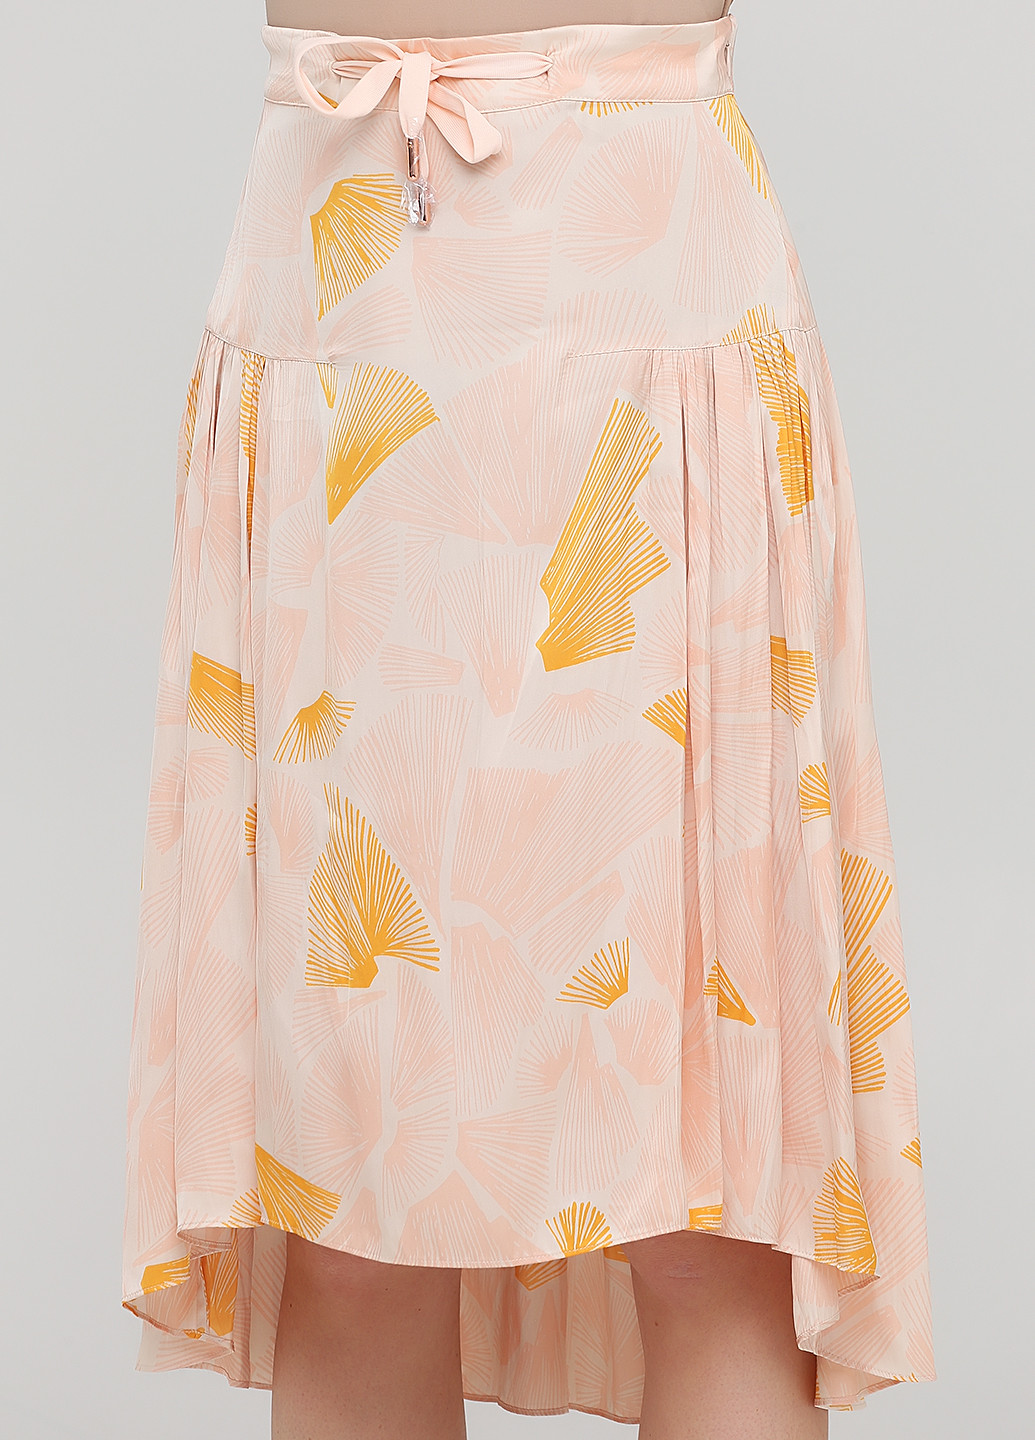 Светло-розовая кэжуал цветочной расцветки юбка Kookai а-силуэта (трапеция)